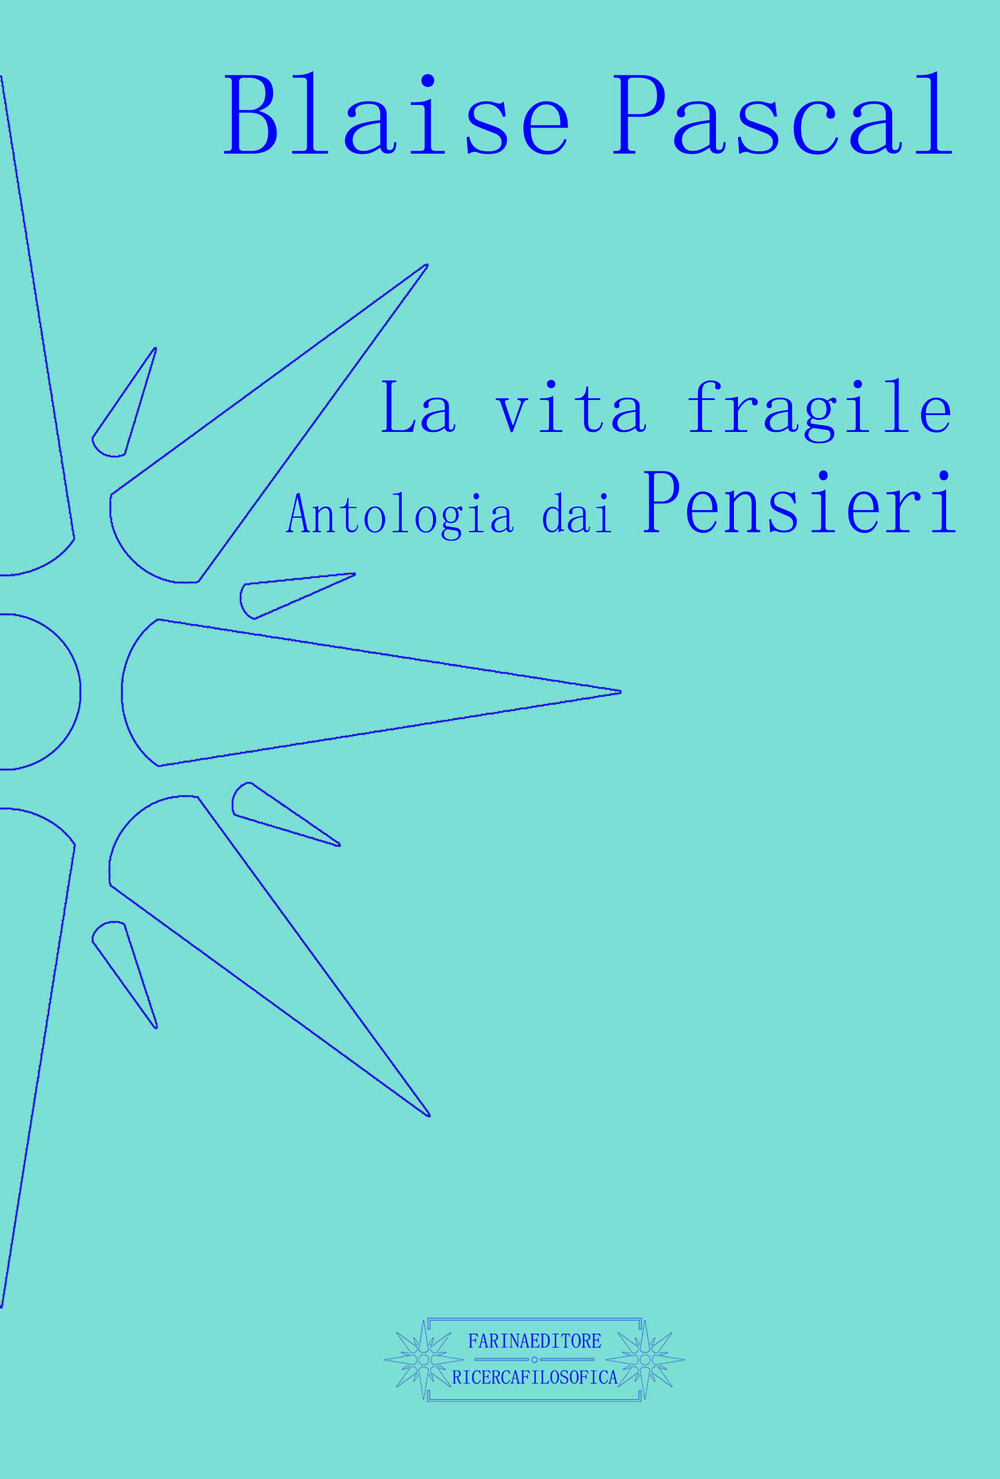 Image of La vita fragile. Antologia dai pensieri